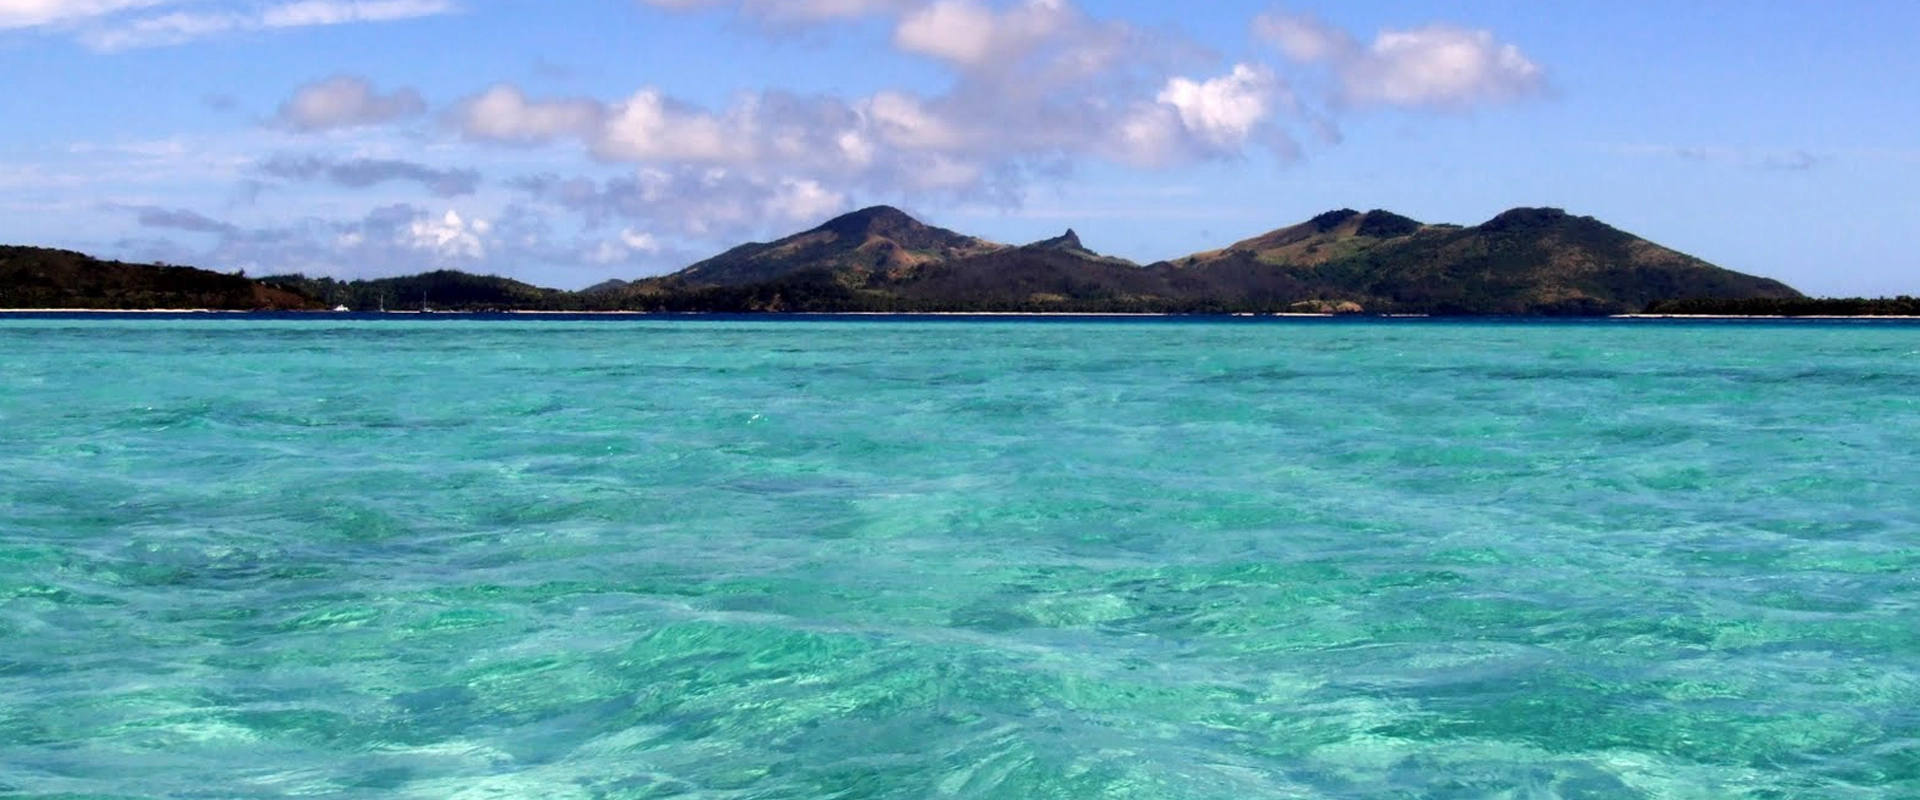 voyage fidji lautoka mer